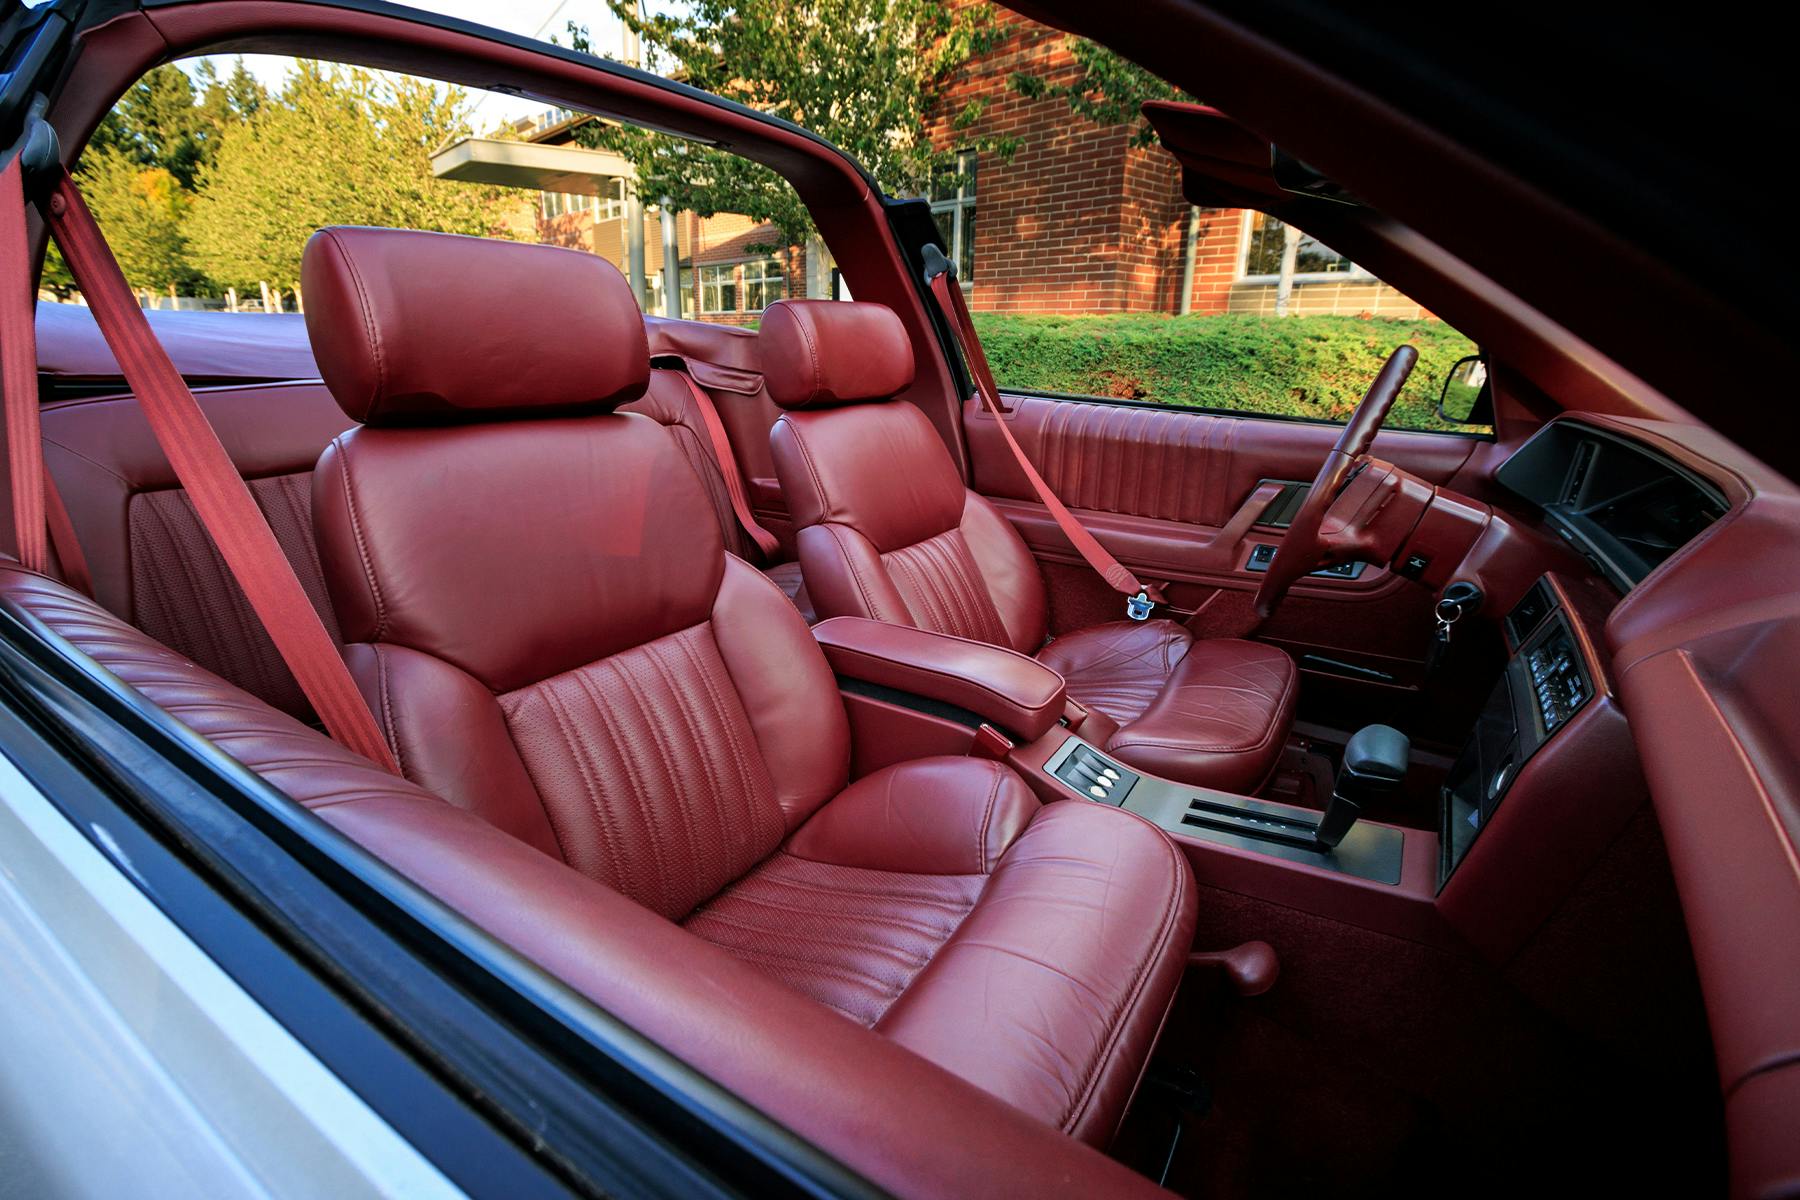 1991 Oldsmobile Cutlass Supreme Convertible interior front seats